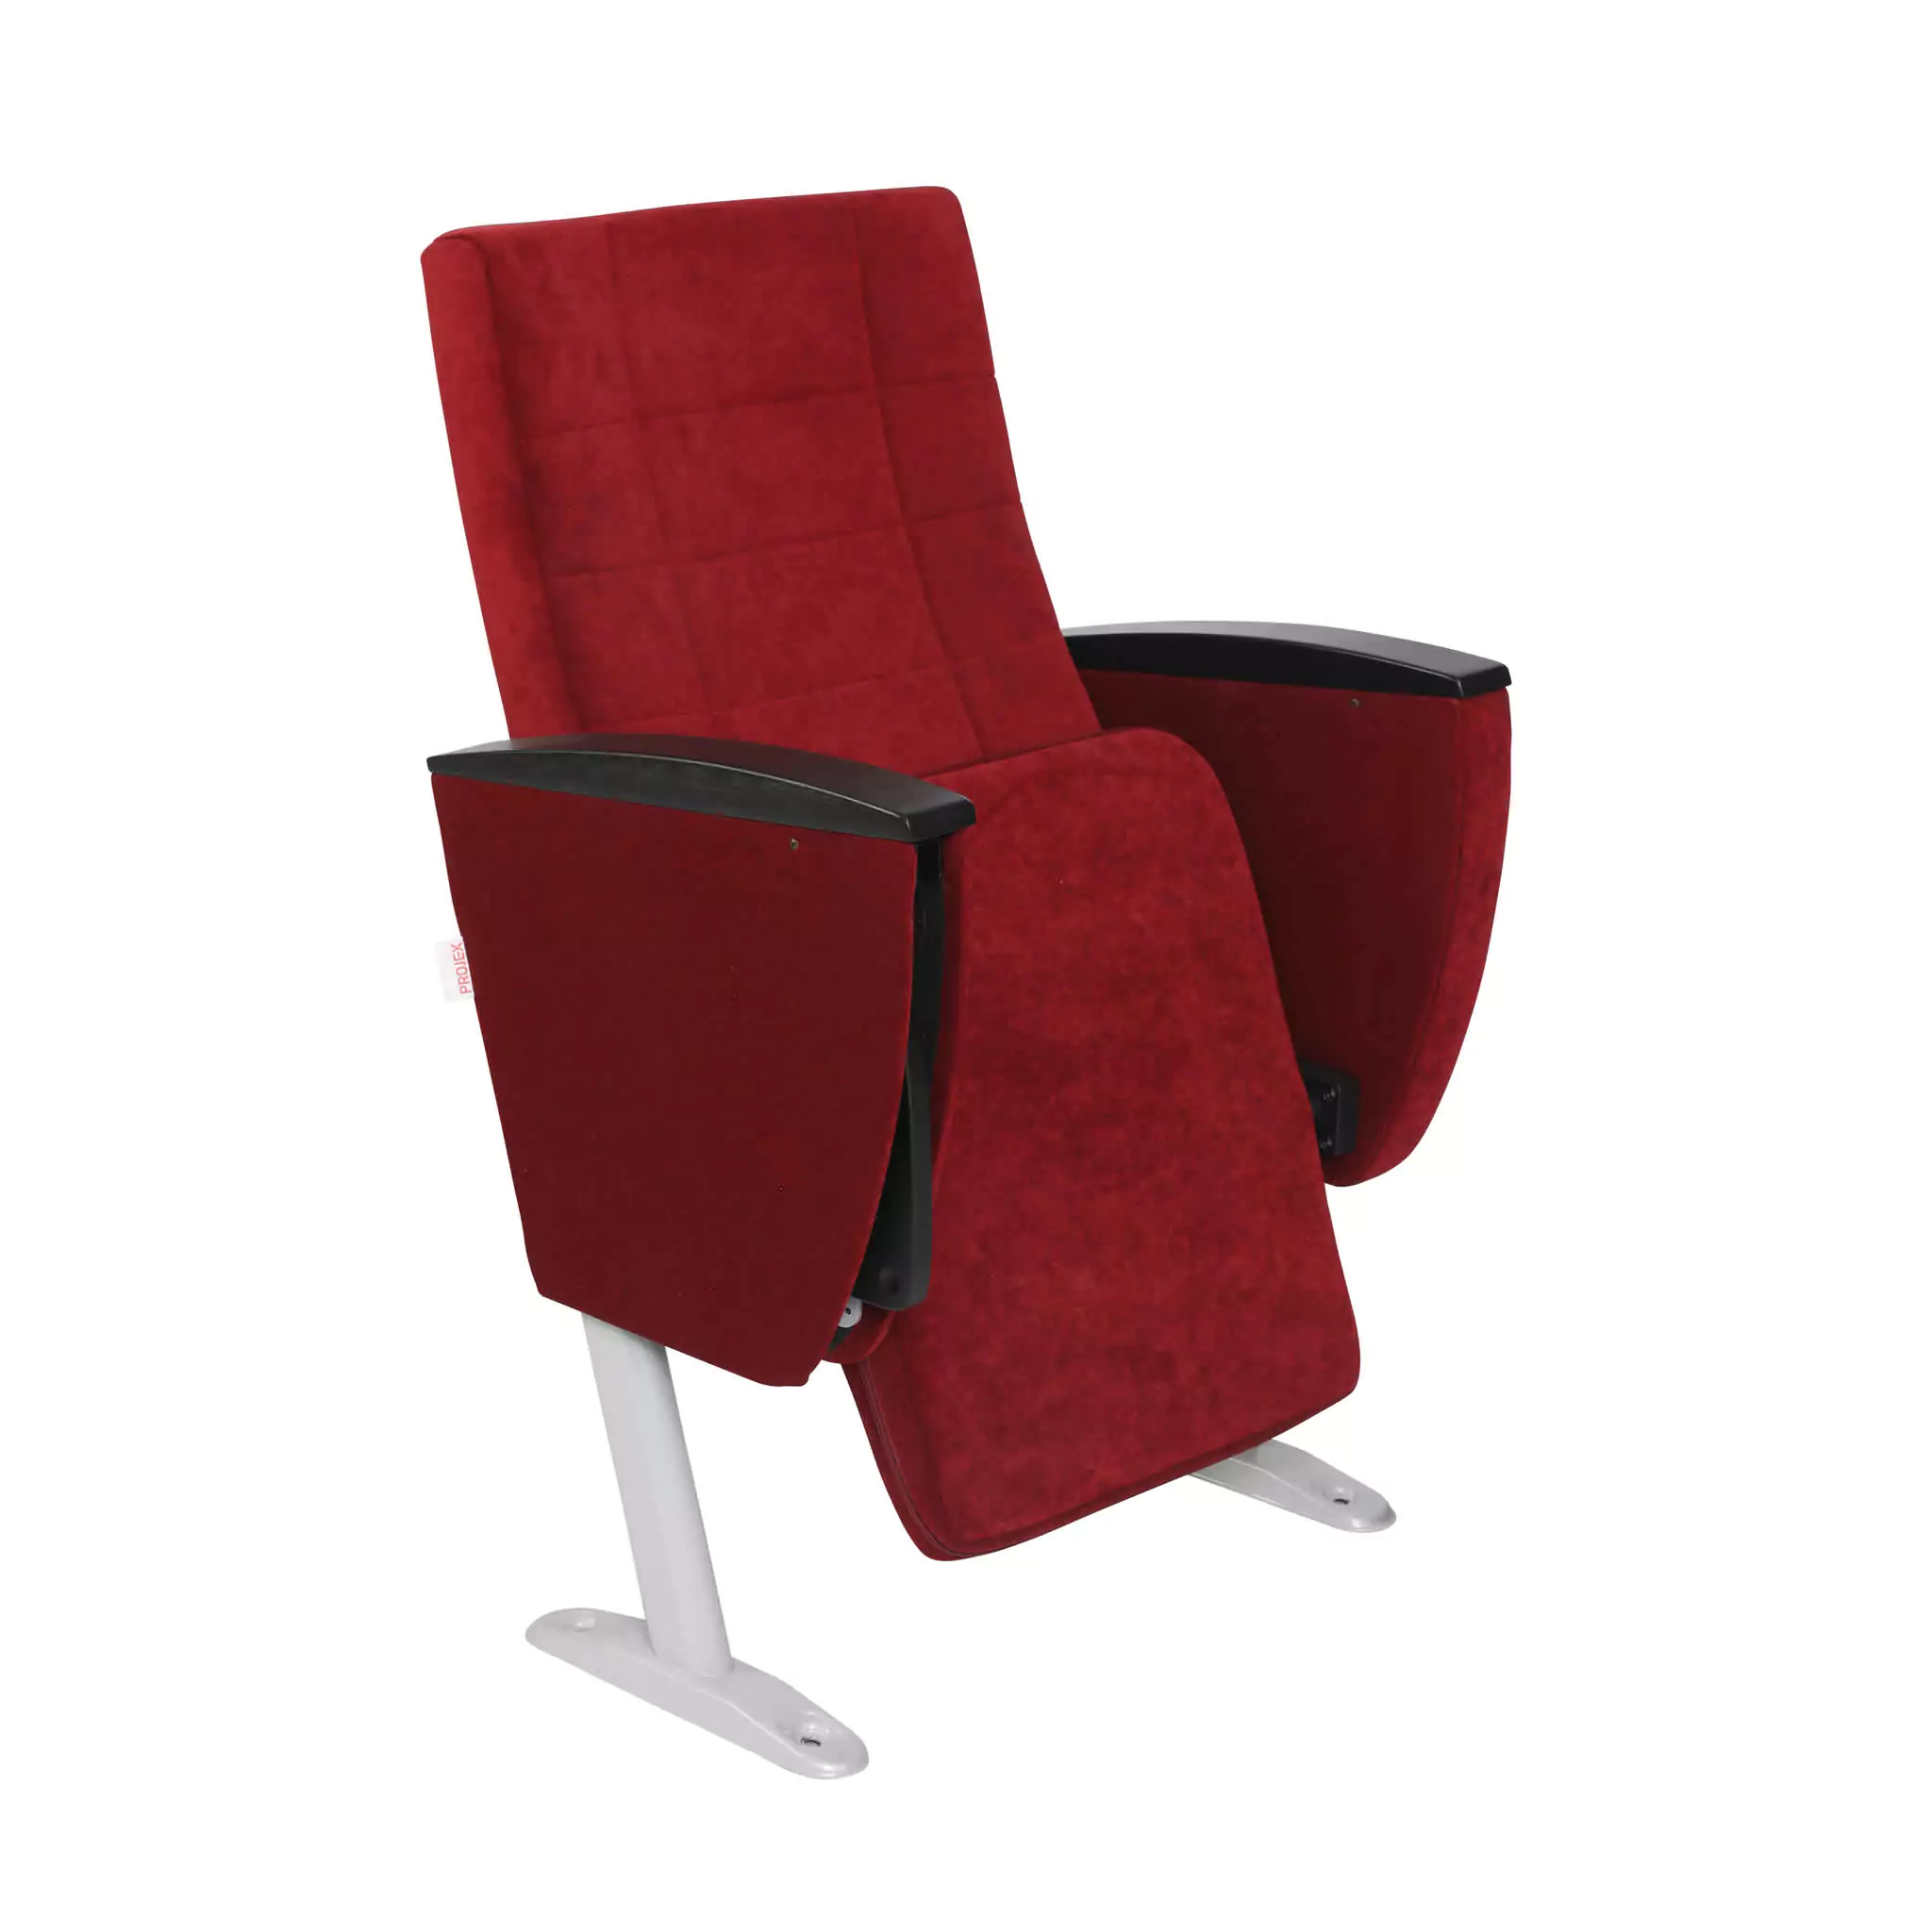 Simko Seating Product Cinema Seat Safir AP 01